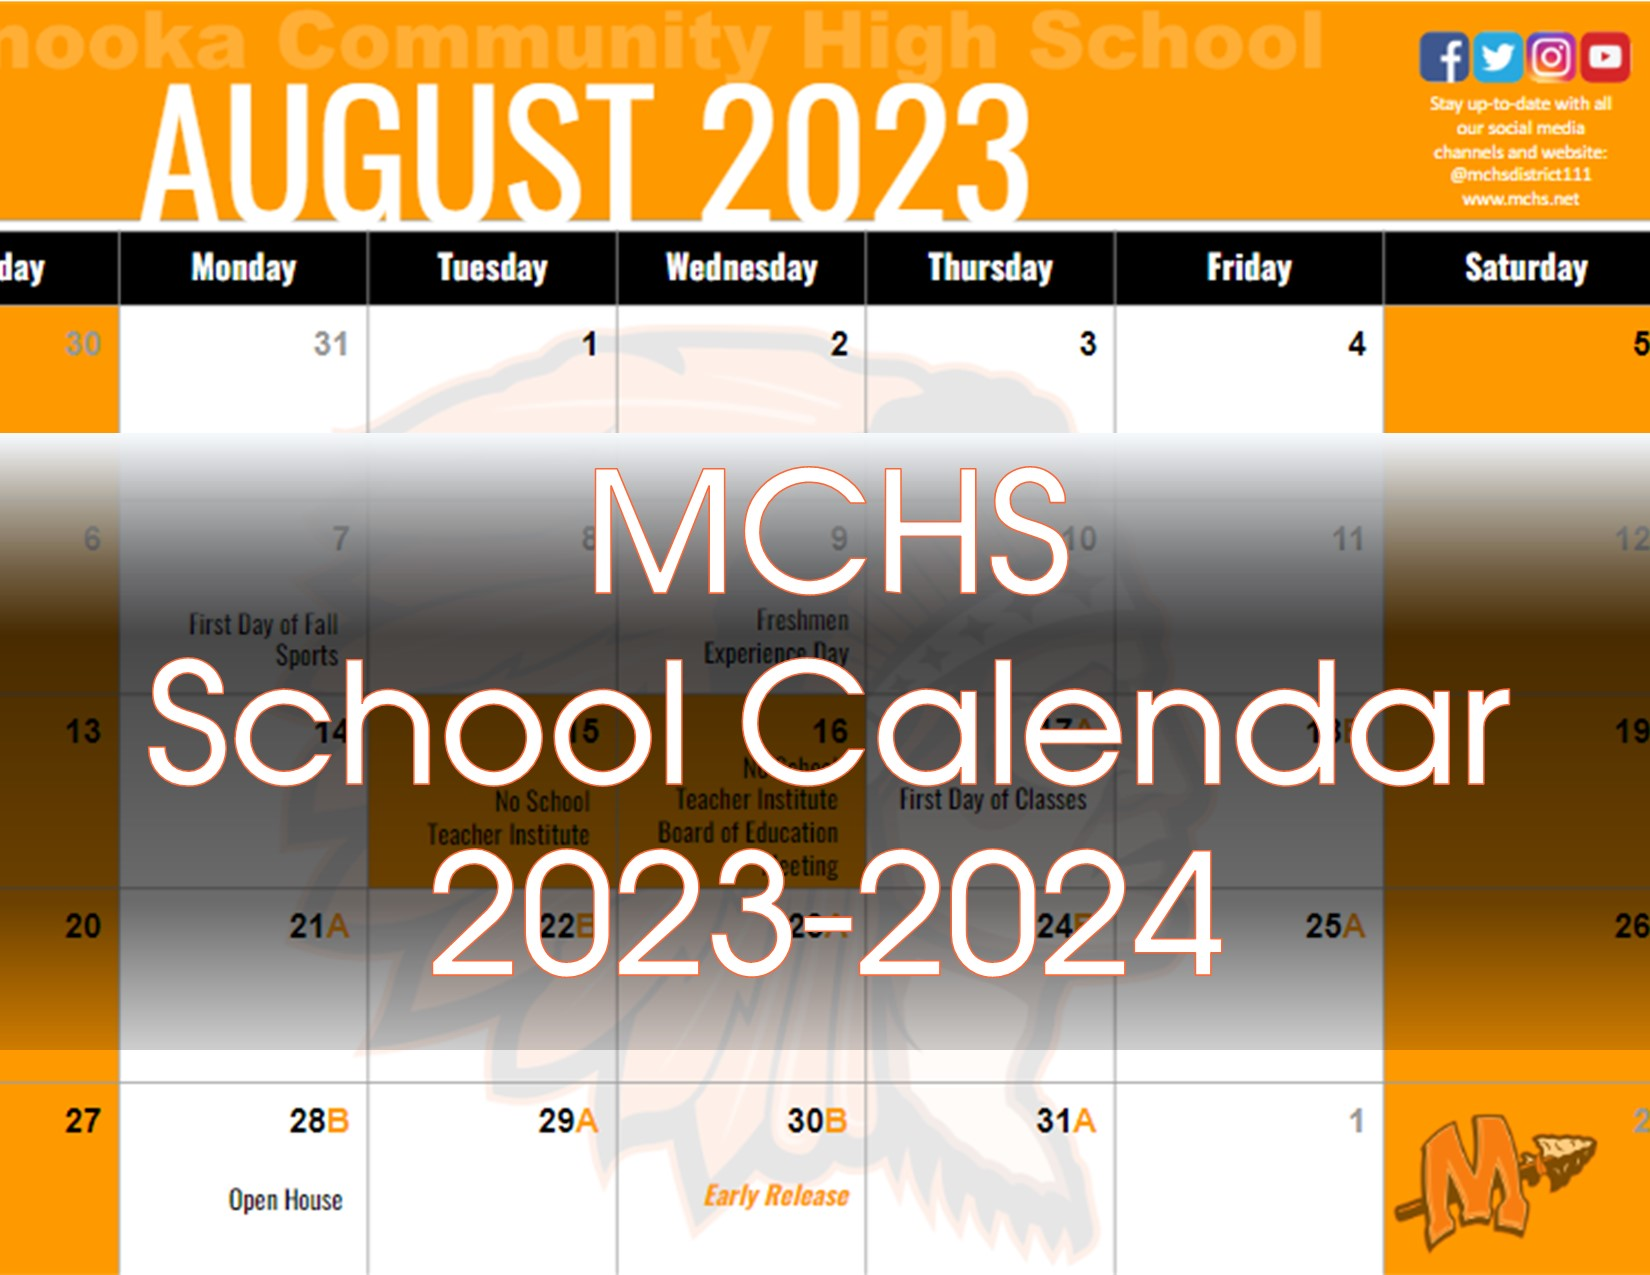 MCHS School Calendar 2022/23